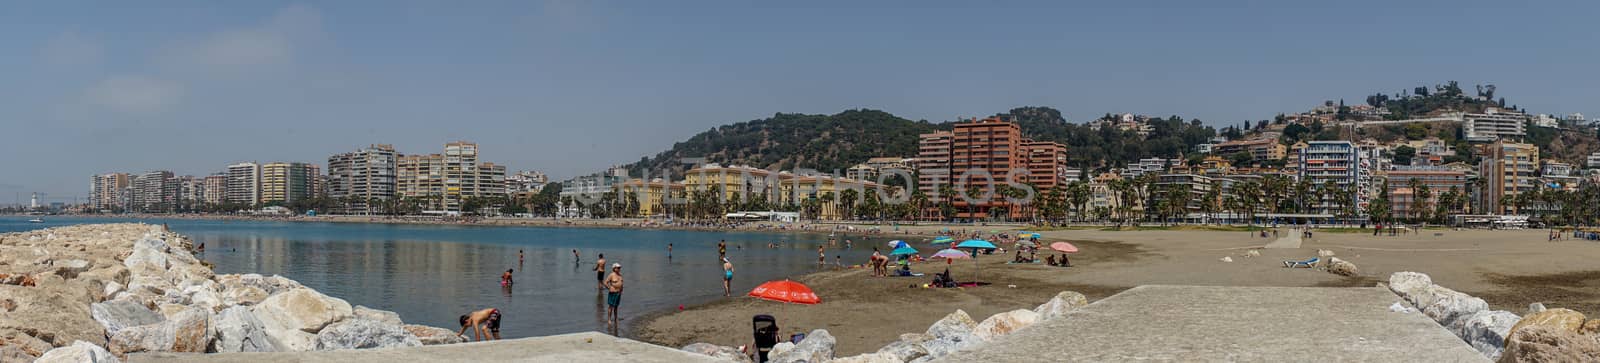 Panoramic view of the ocean at Malagueta beach with rocks at Mal by ramana16